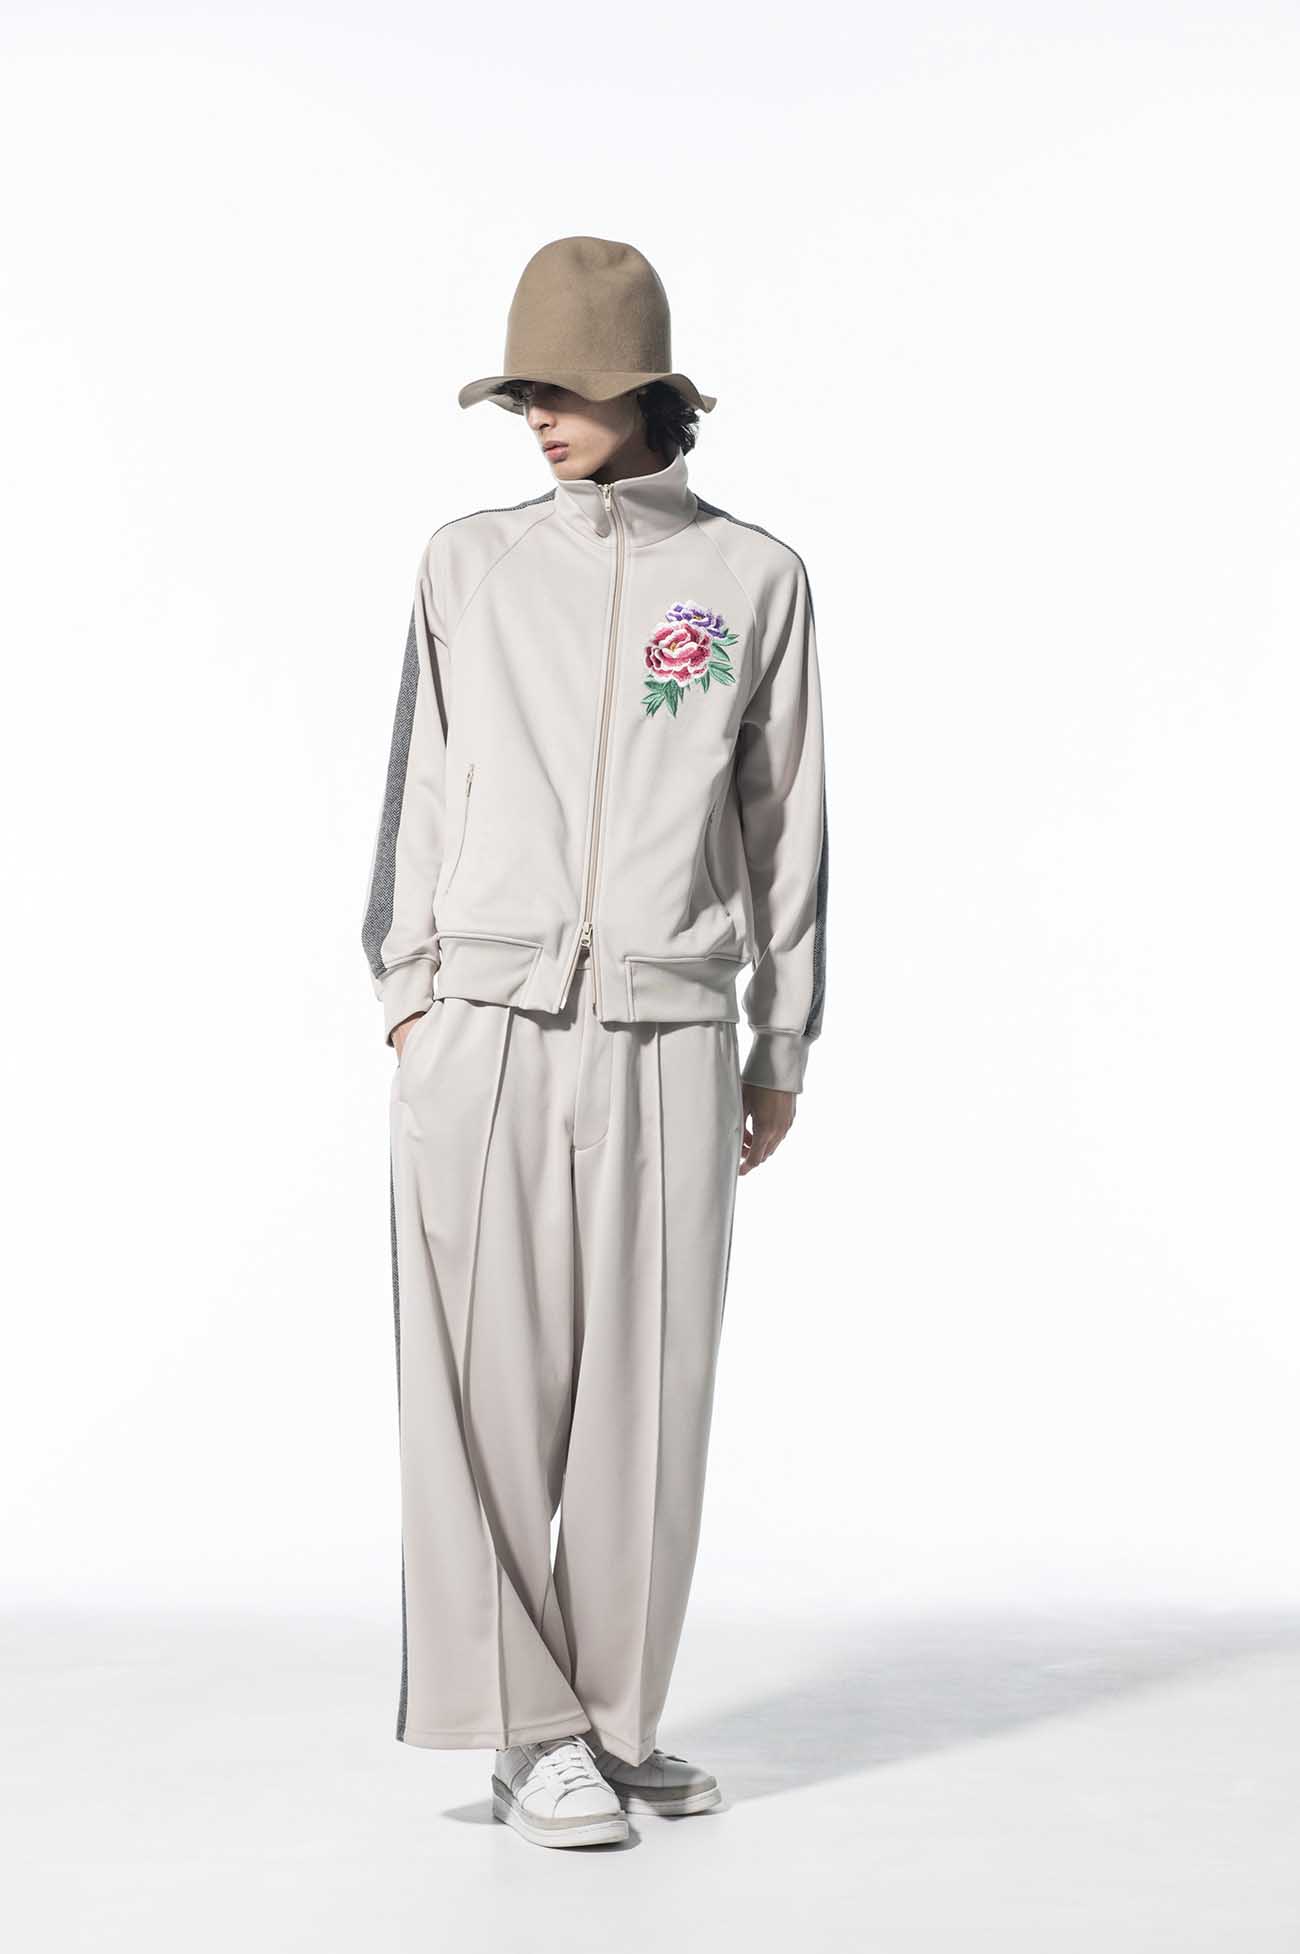 Pe/Smooth Jersey Peony Flower Embroidery Raglan Tweed Line Track Jacket <Beige>